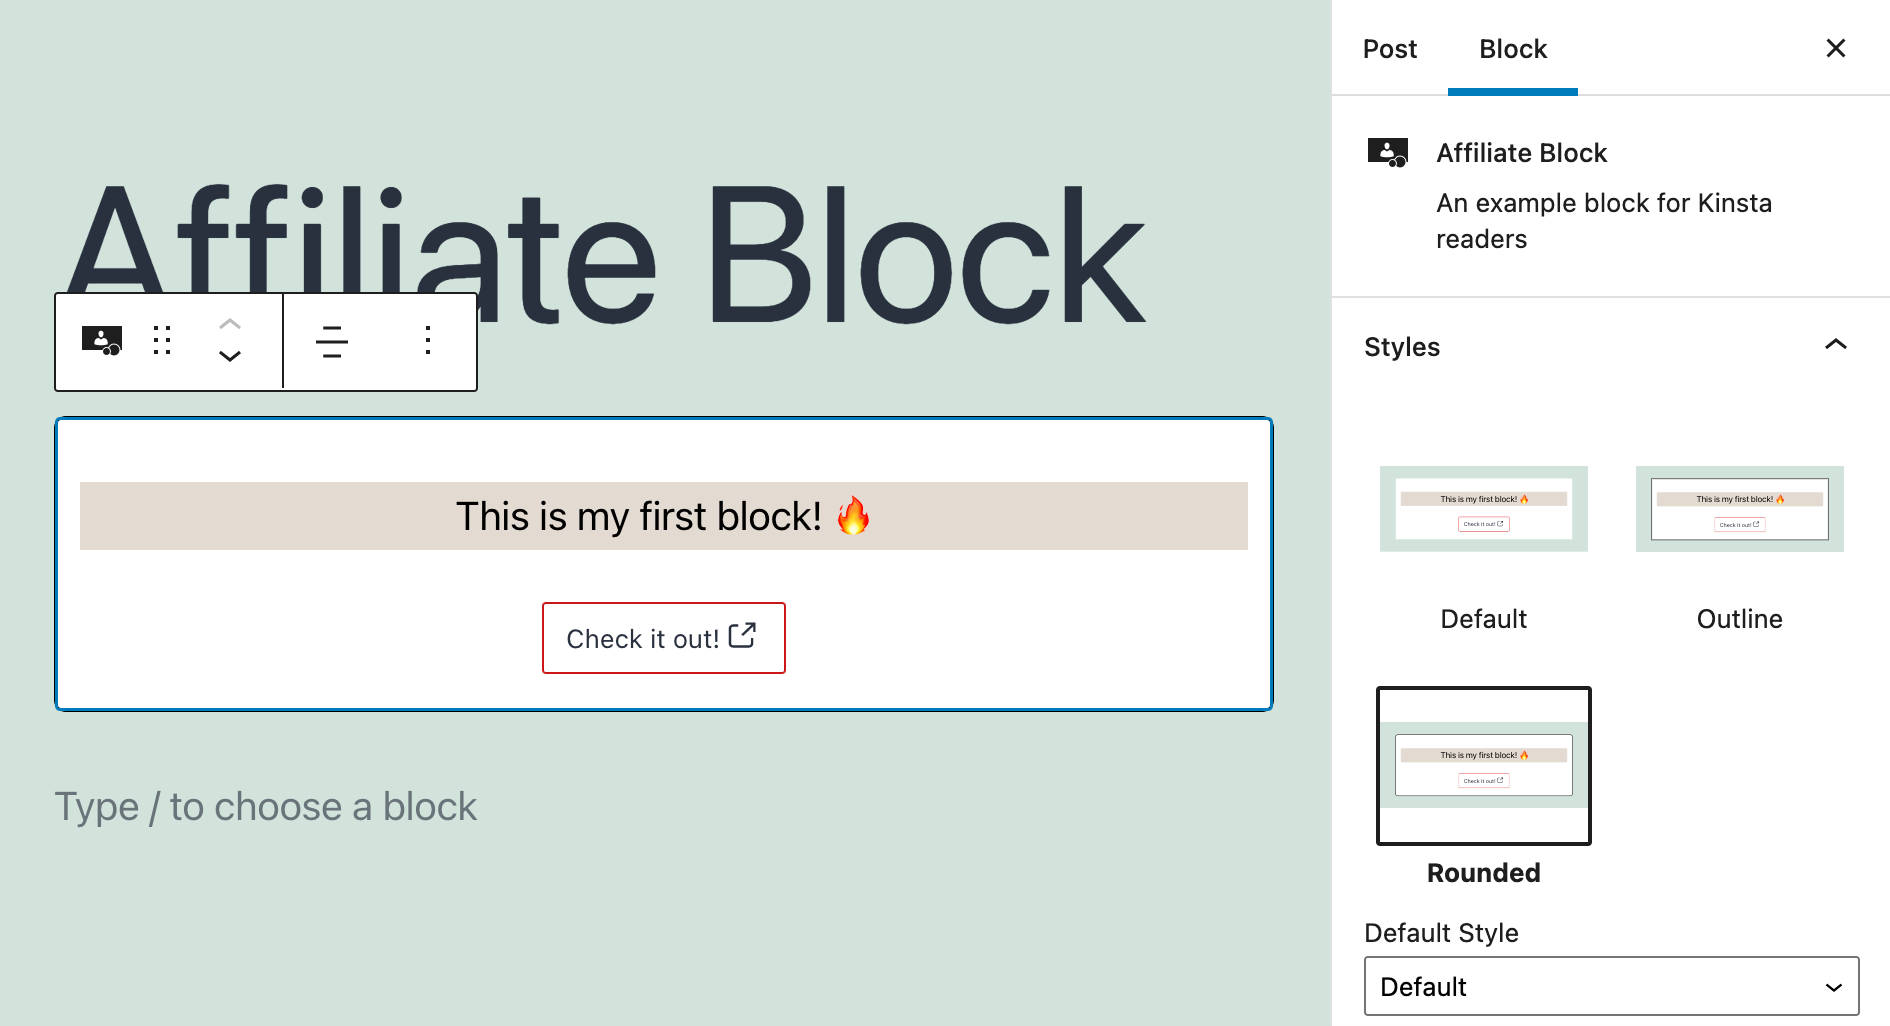 Affiliate block styles." width="1890" height="1026"  />

<p class=